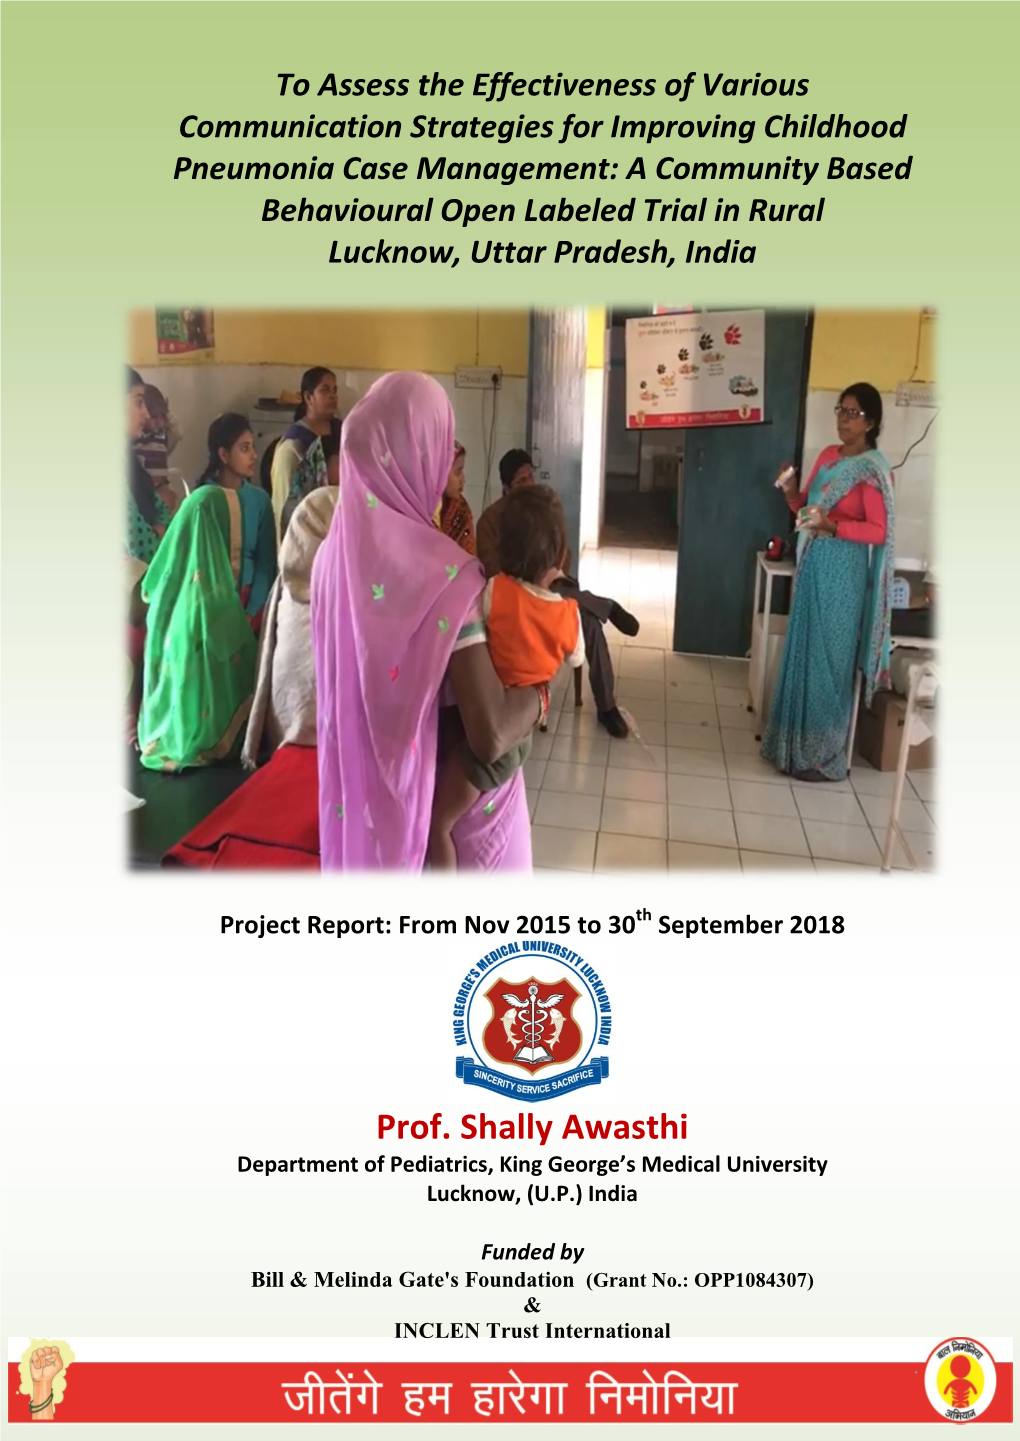 Prof. Shally Awasthi Department of Pediatrics, King George’S Medical University Lucknow, (U.P.) India